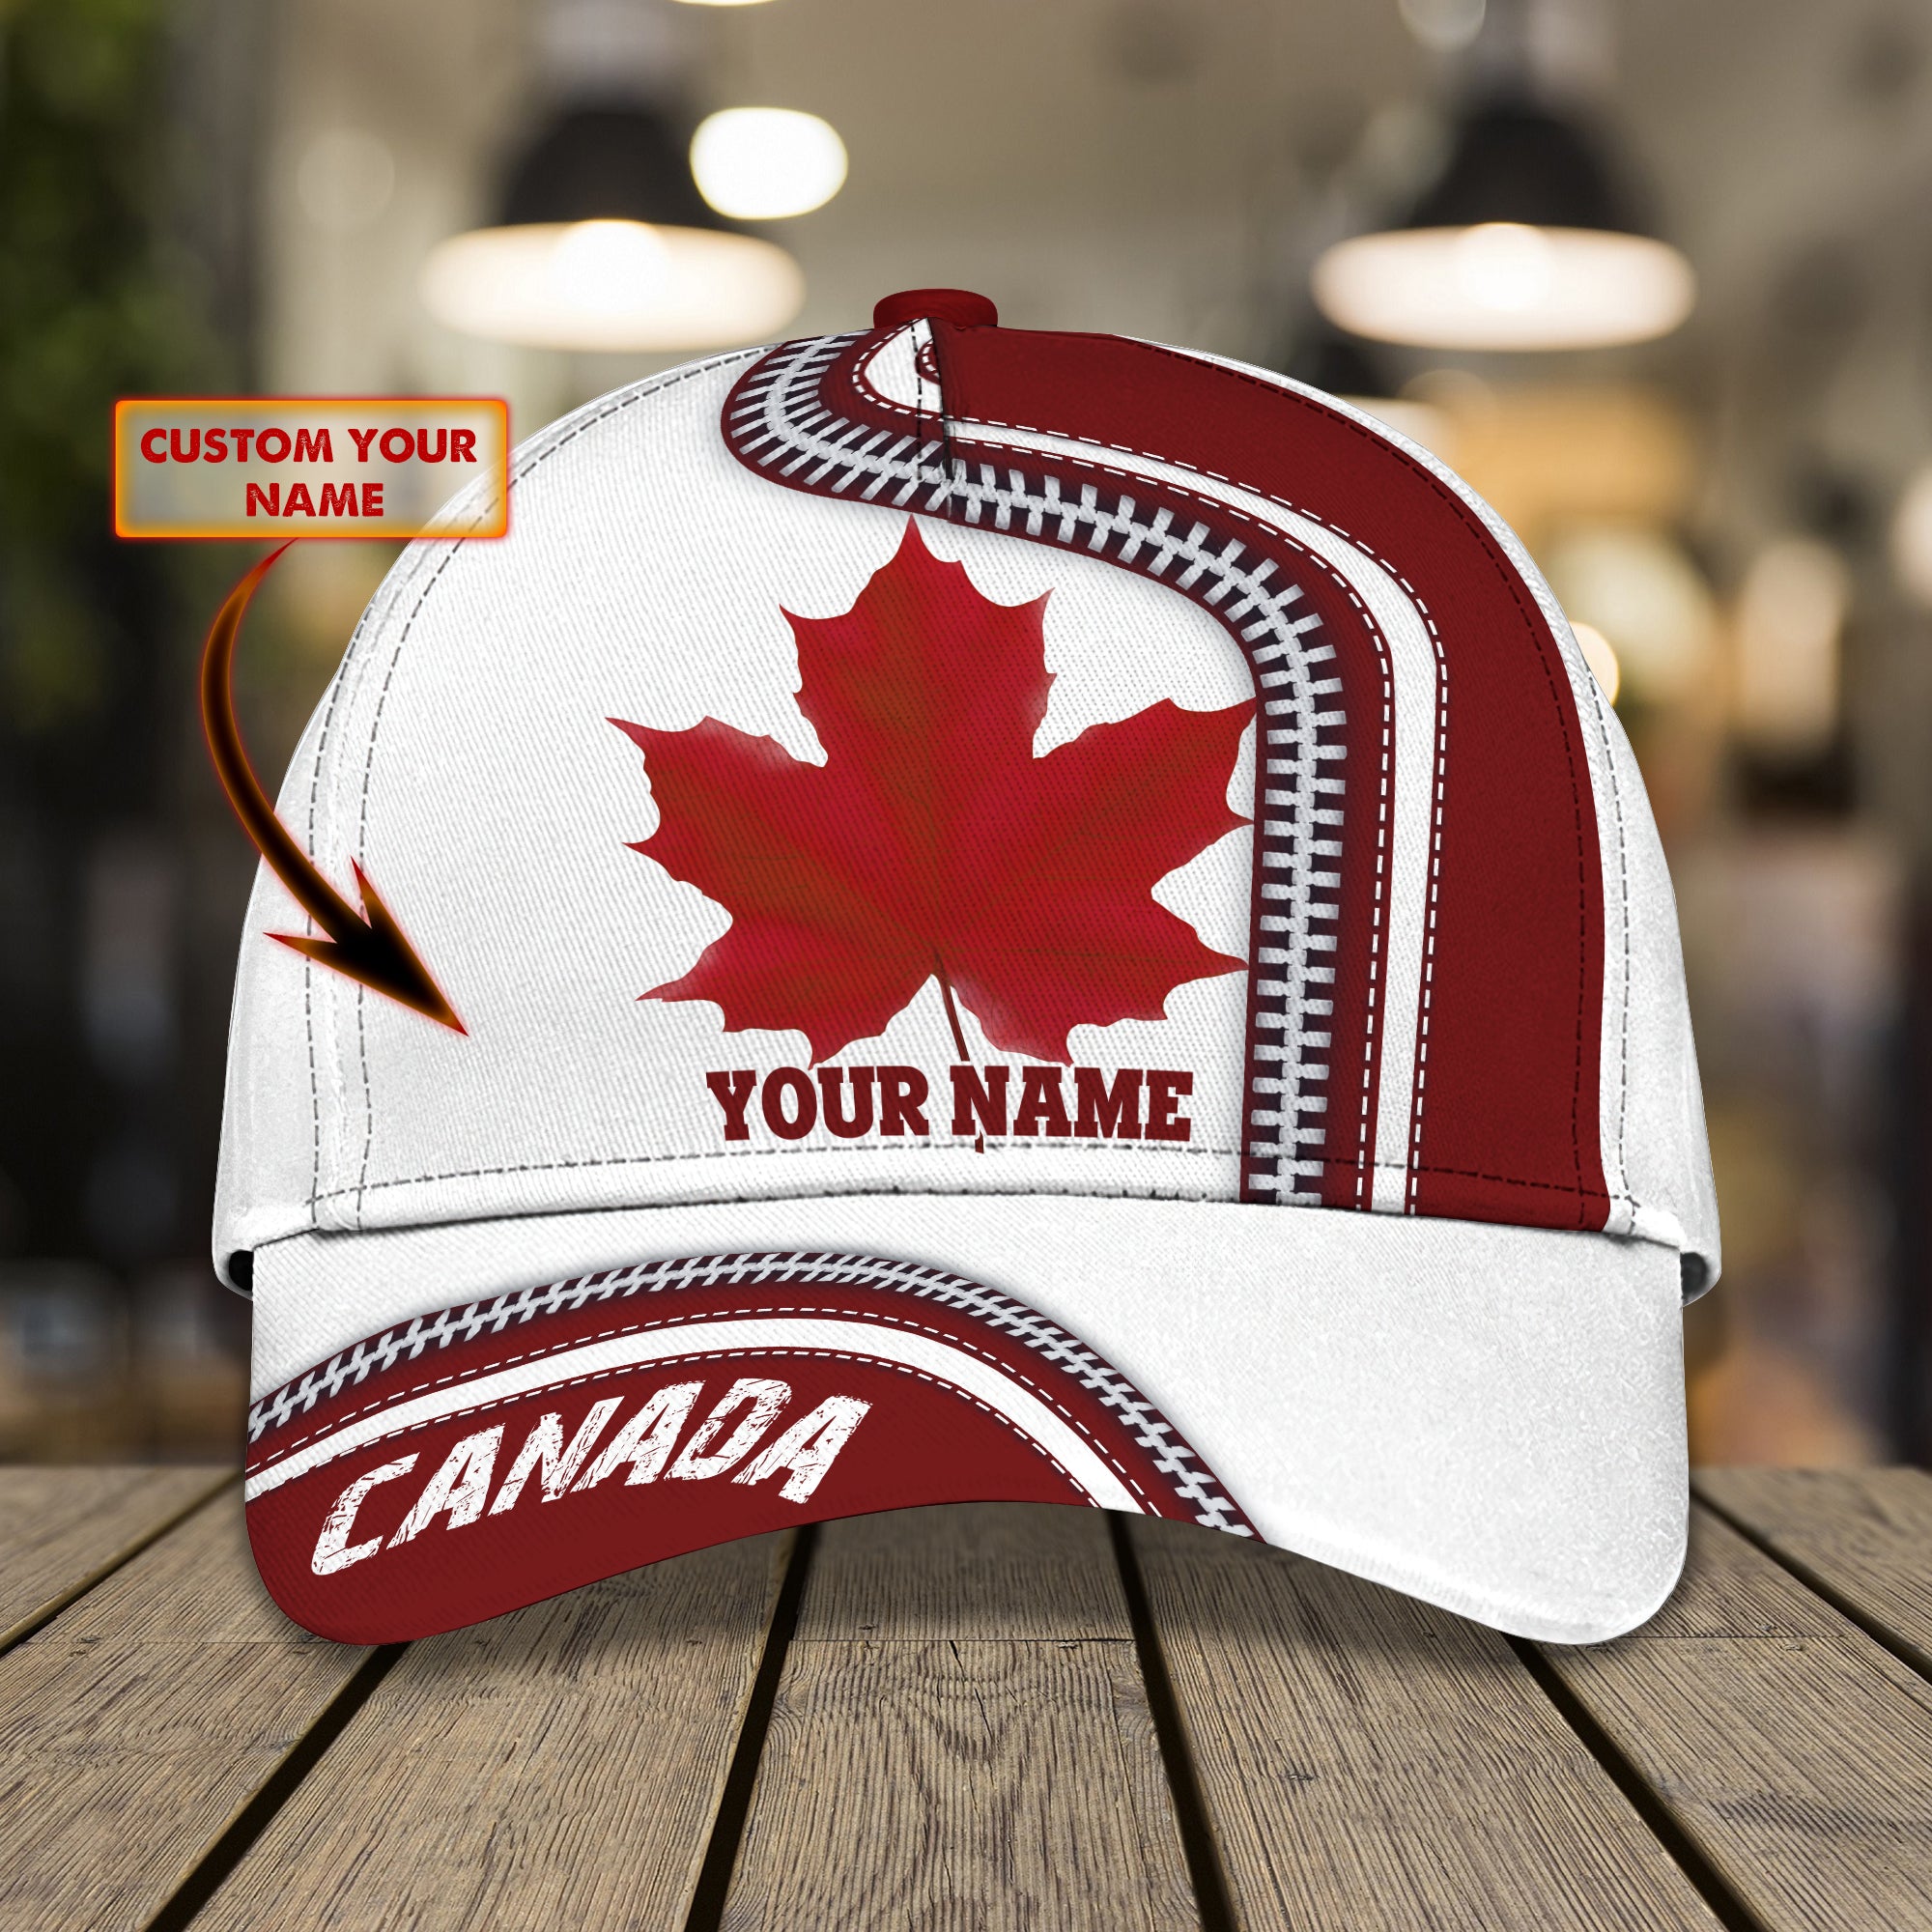 Canada - Personalized Name Cap 148 - Bhn97